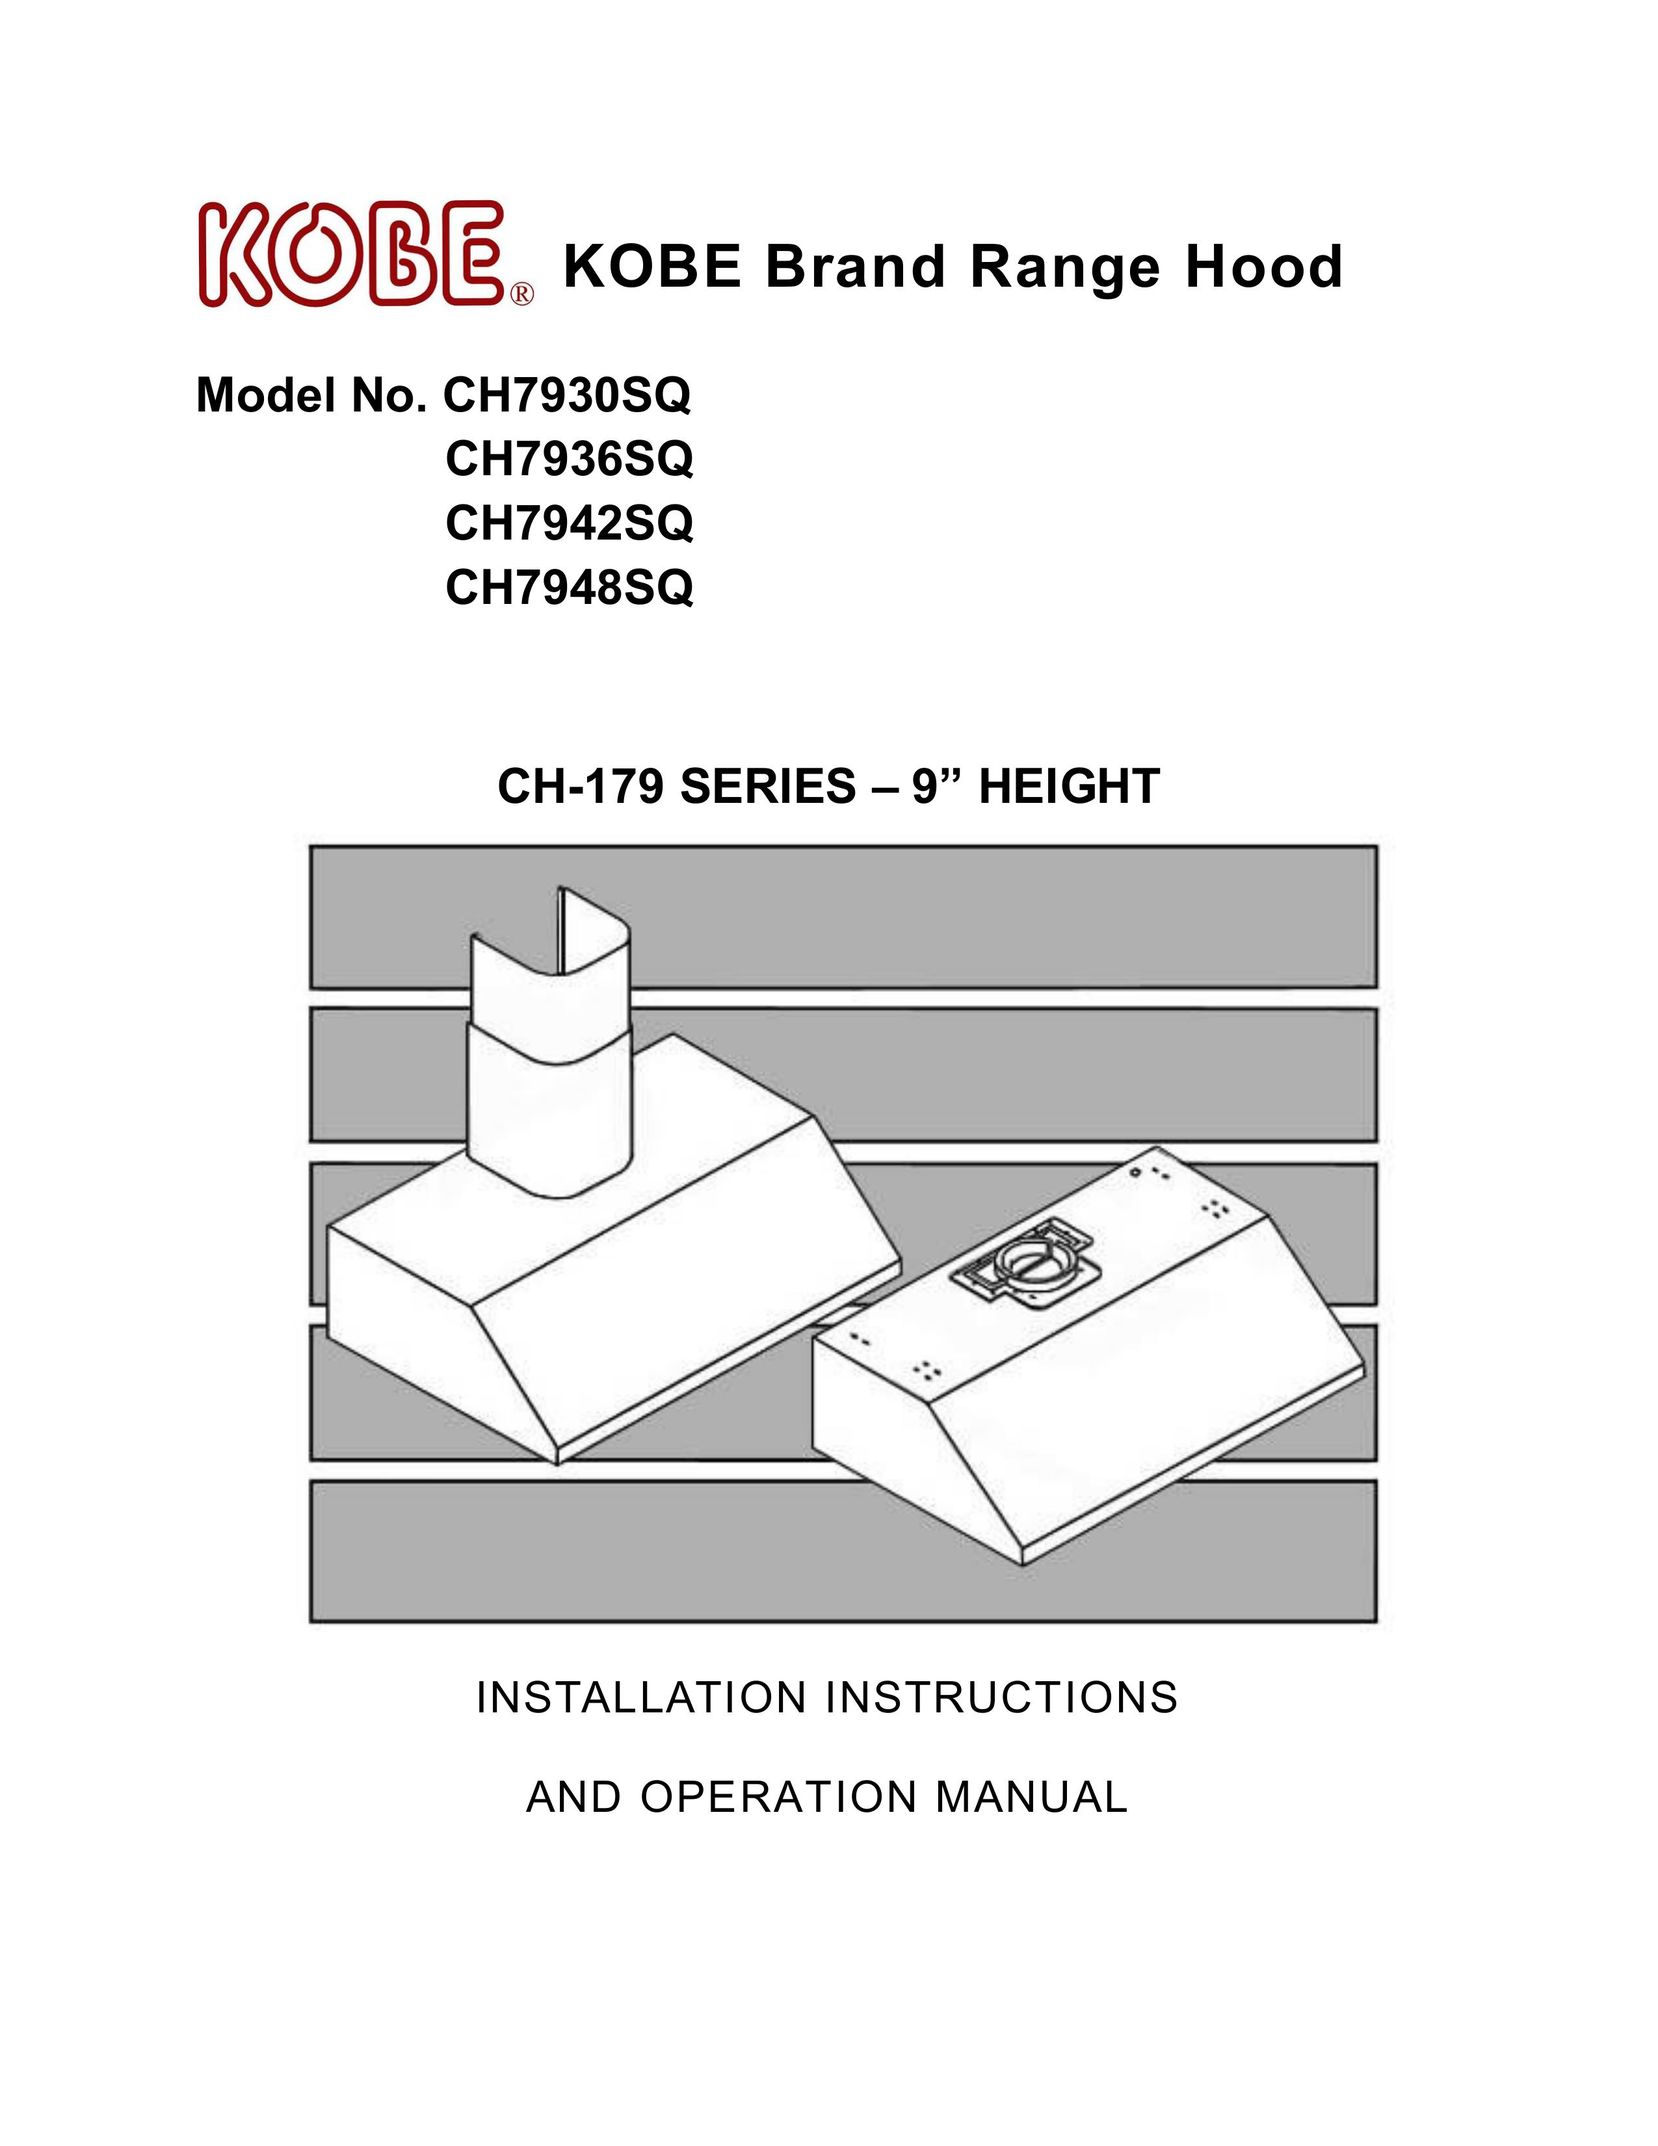 Kobe Range Hoods CH7948SQ Range User Manual